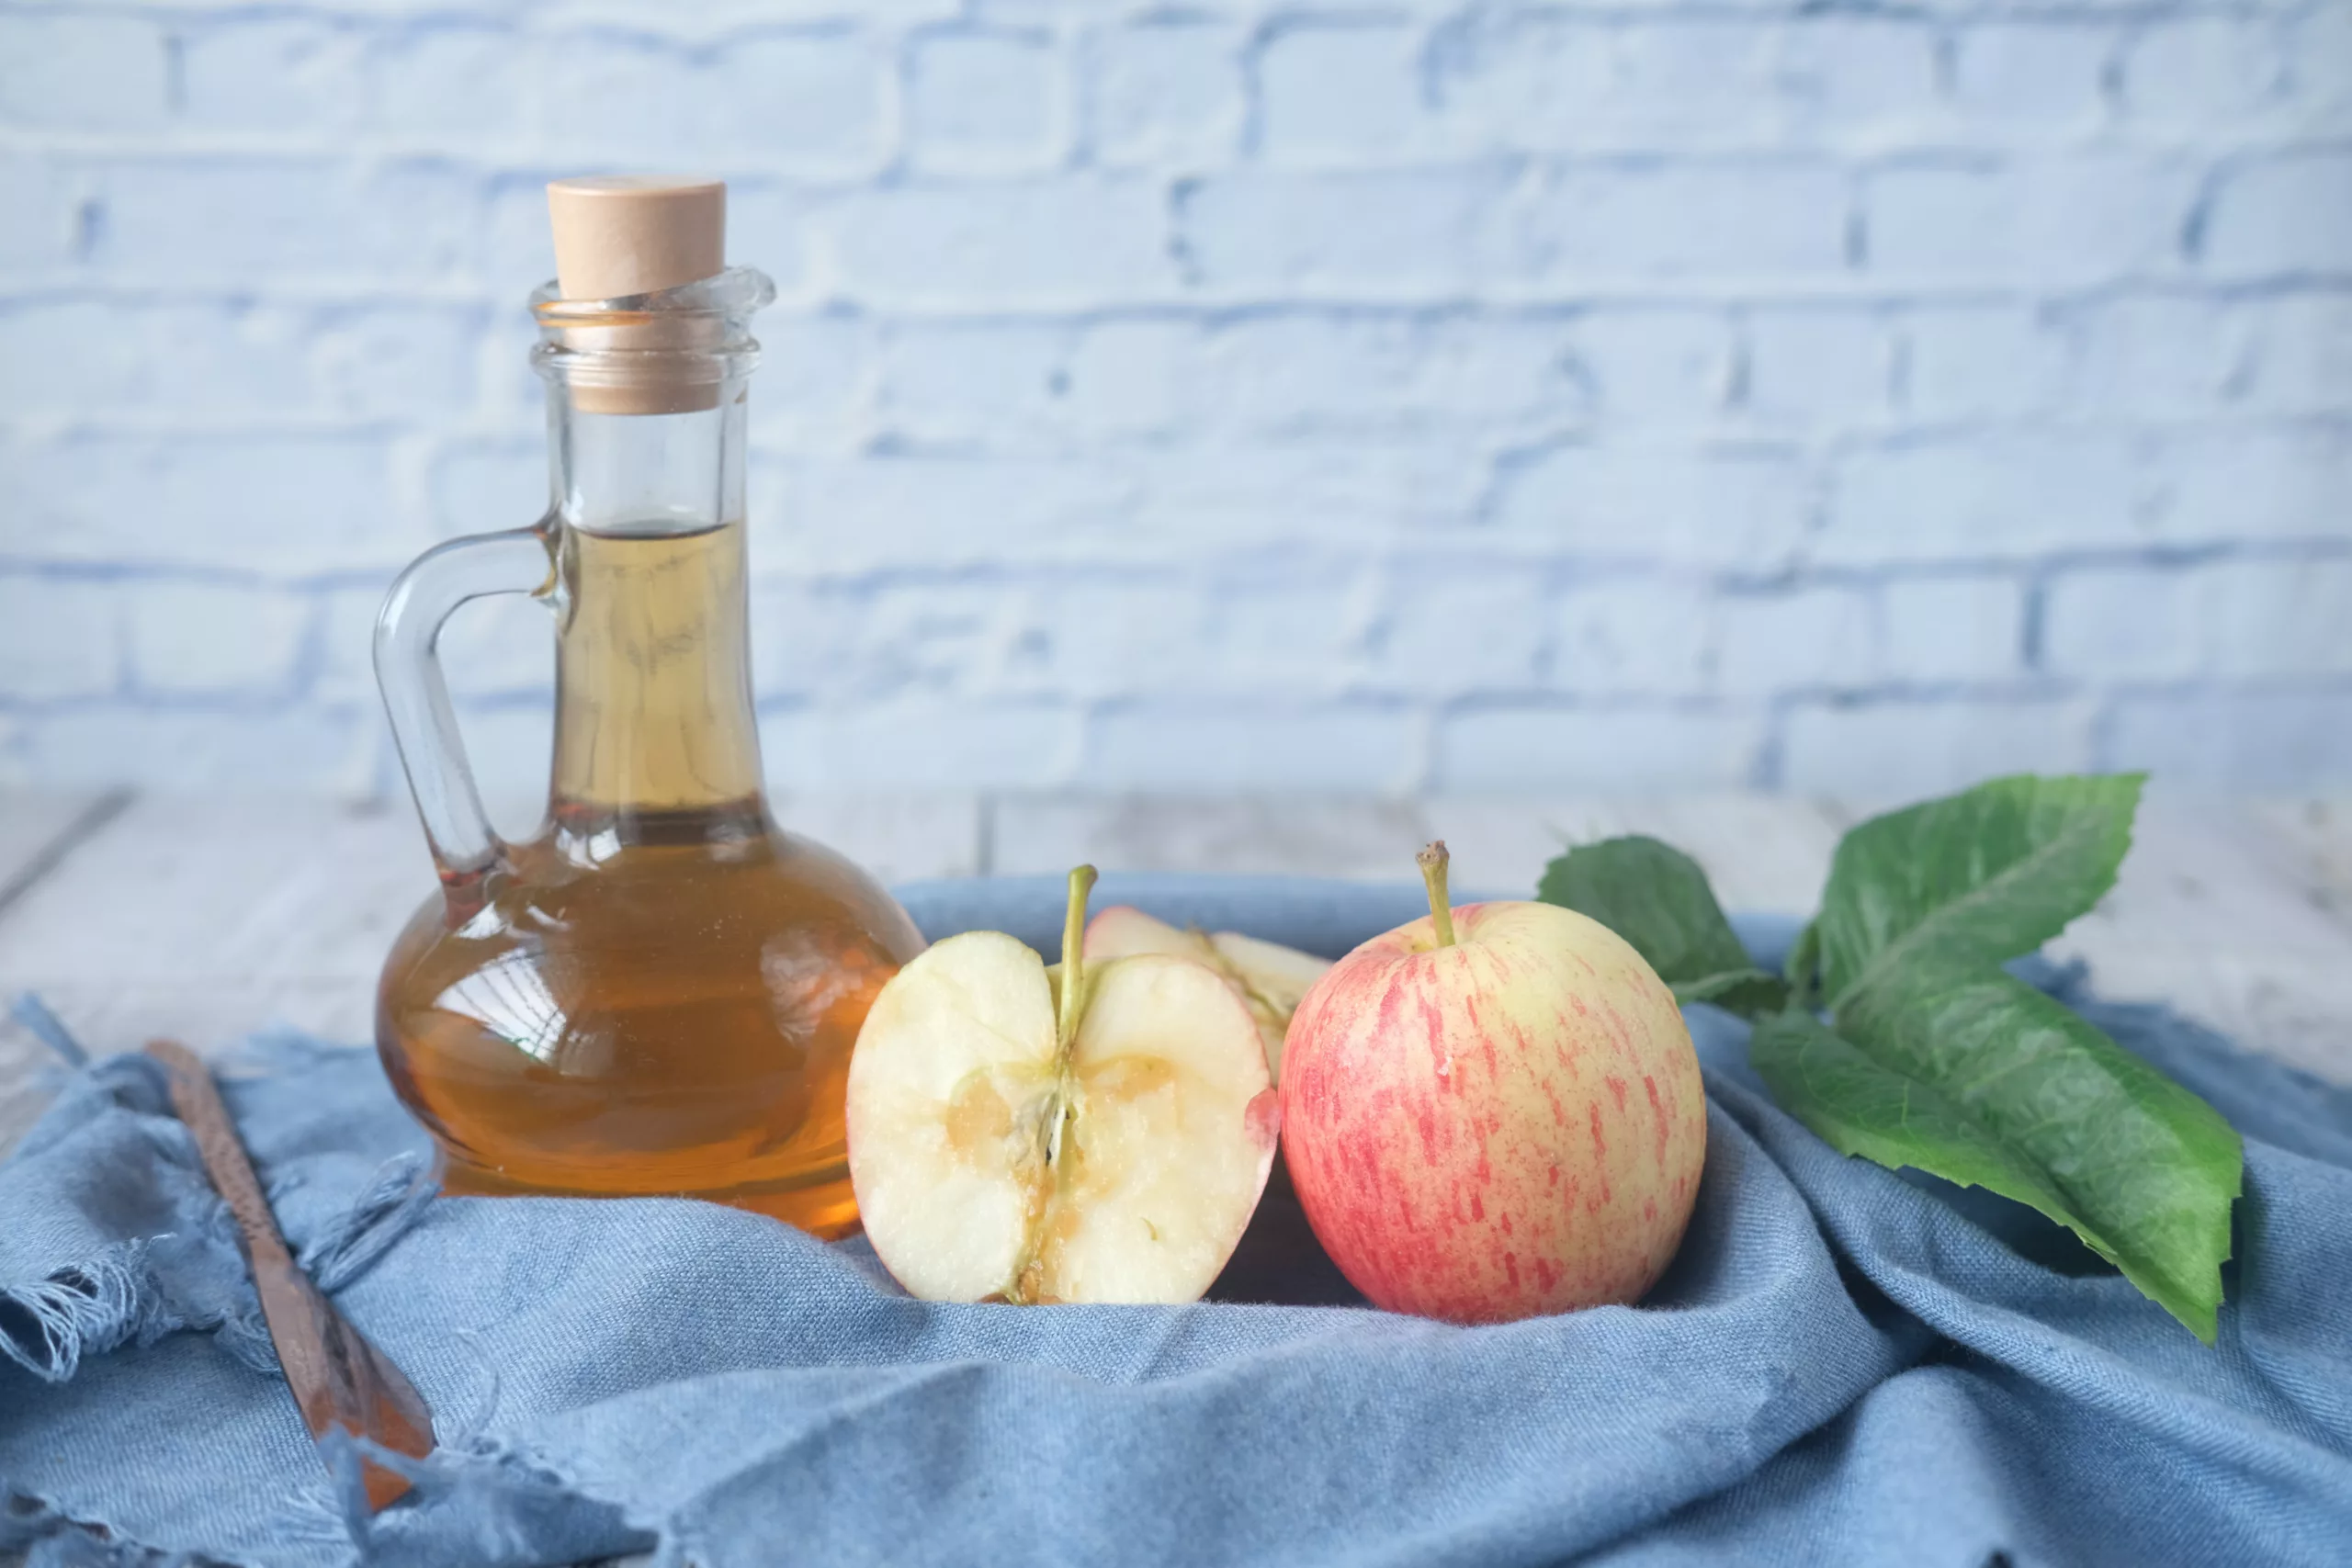 Apple cider vinegar rinse for vaginal odor and freshness